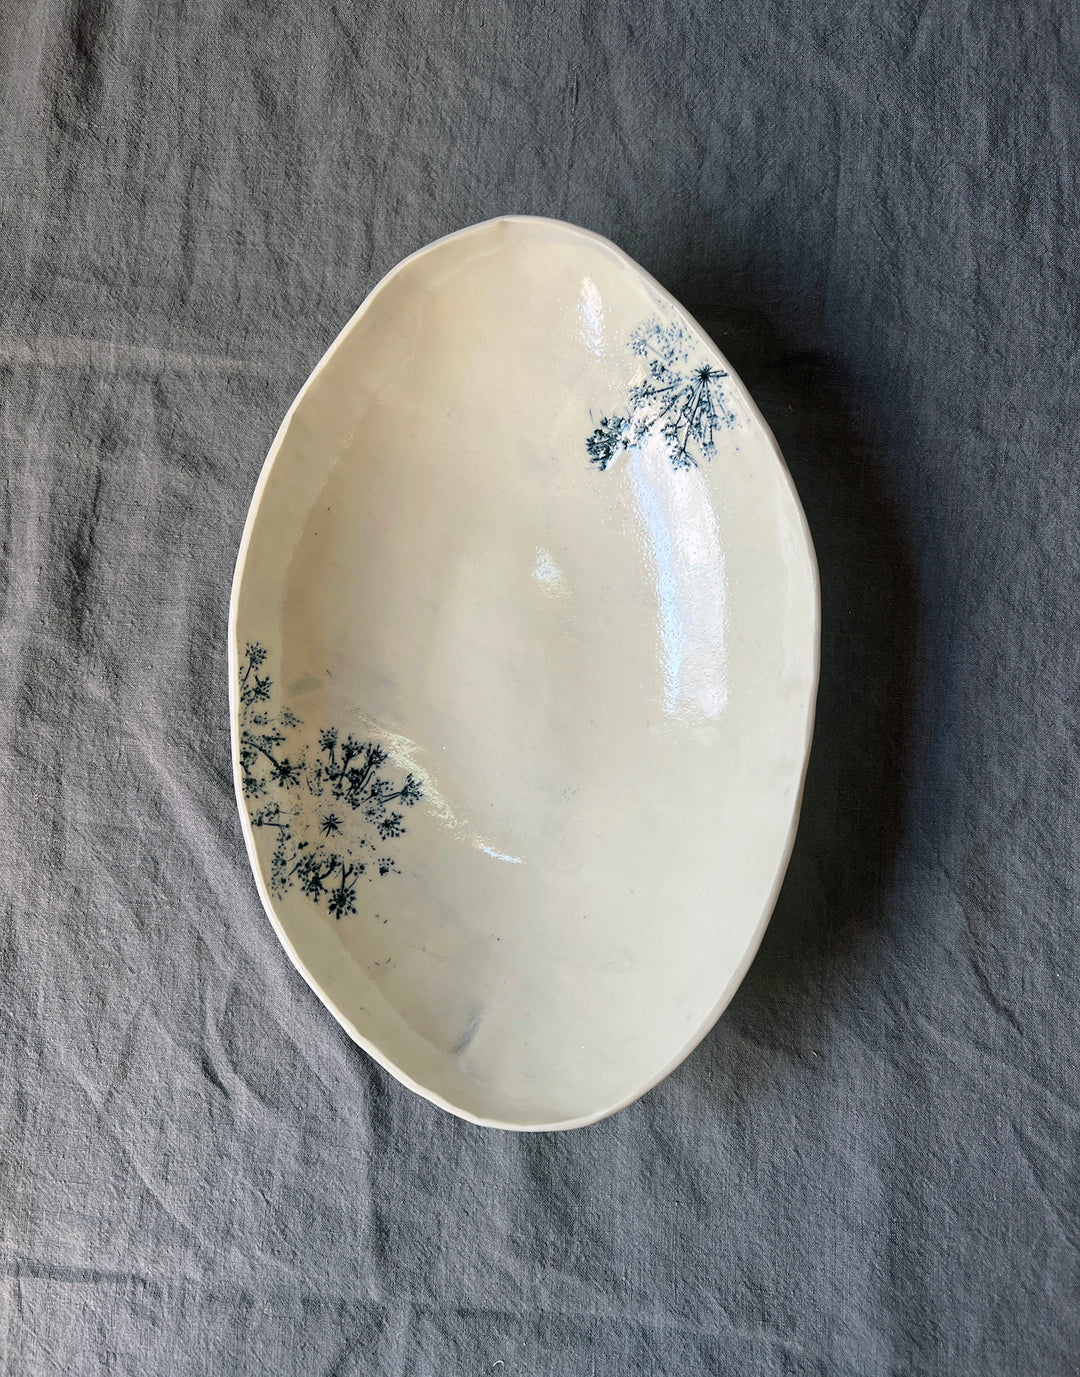 Queen Anne's Lace Oval Bowl - Indigo Glaze